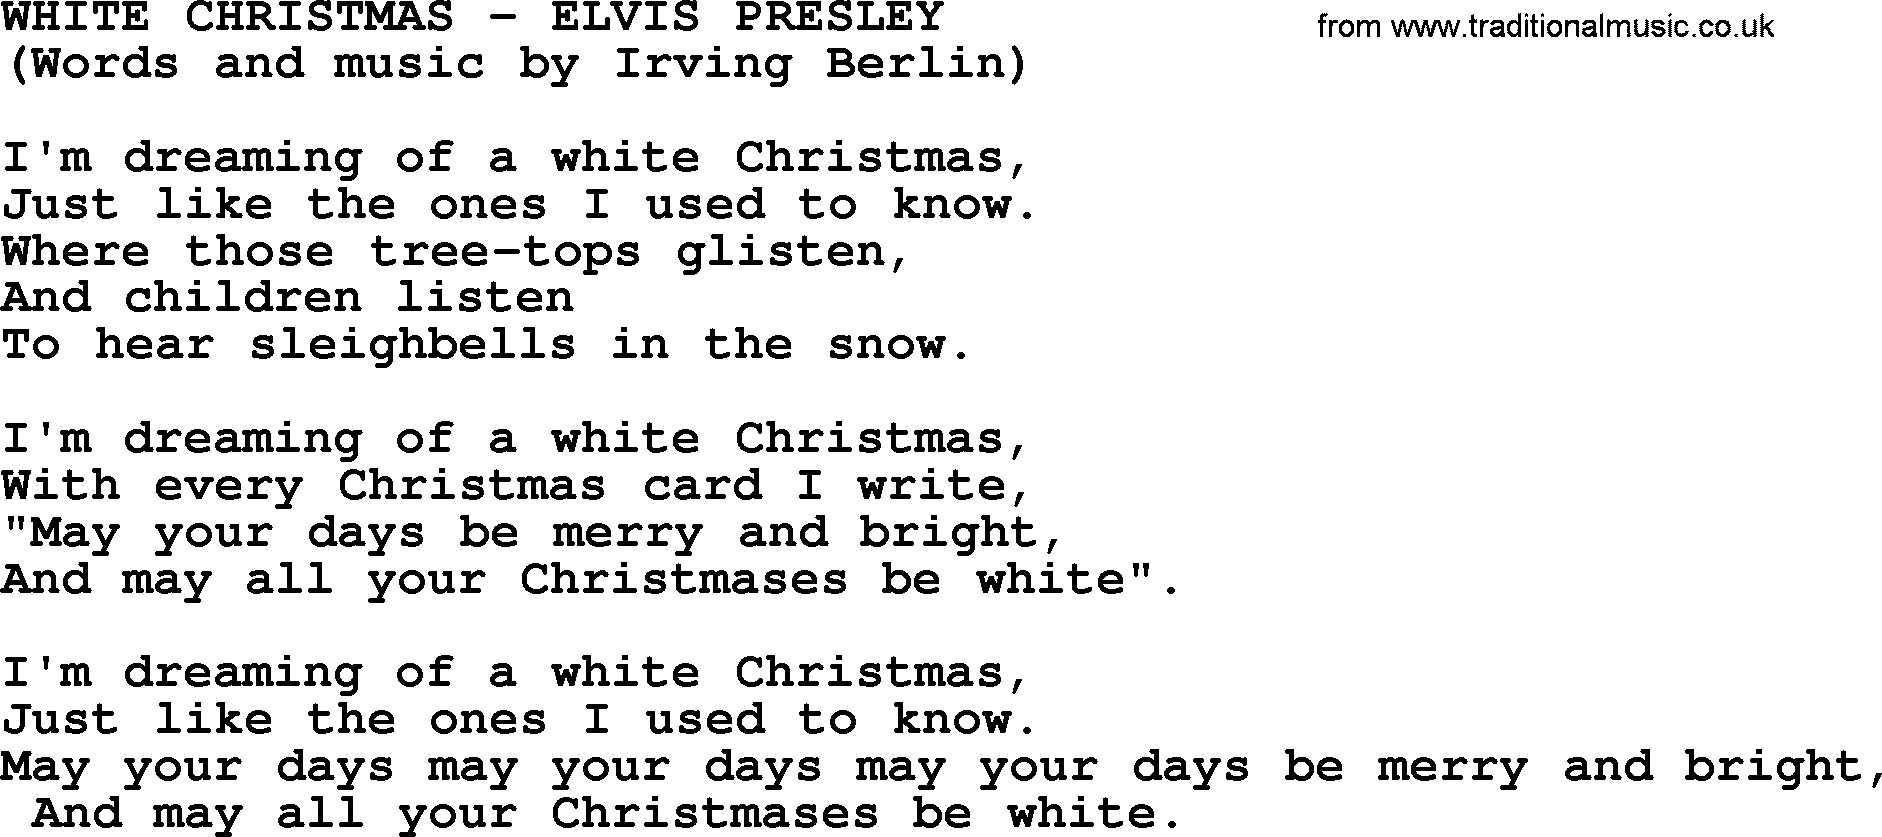 Elvis Presley song: White Christmas lyrics